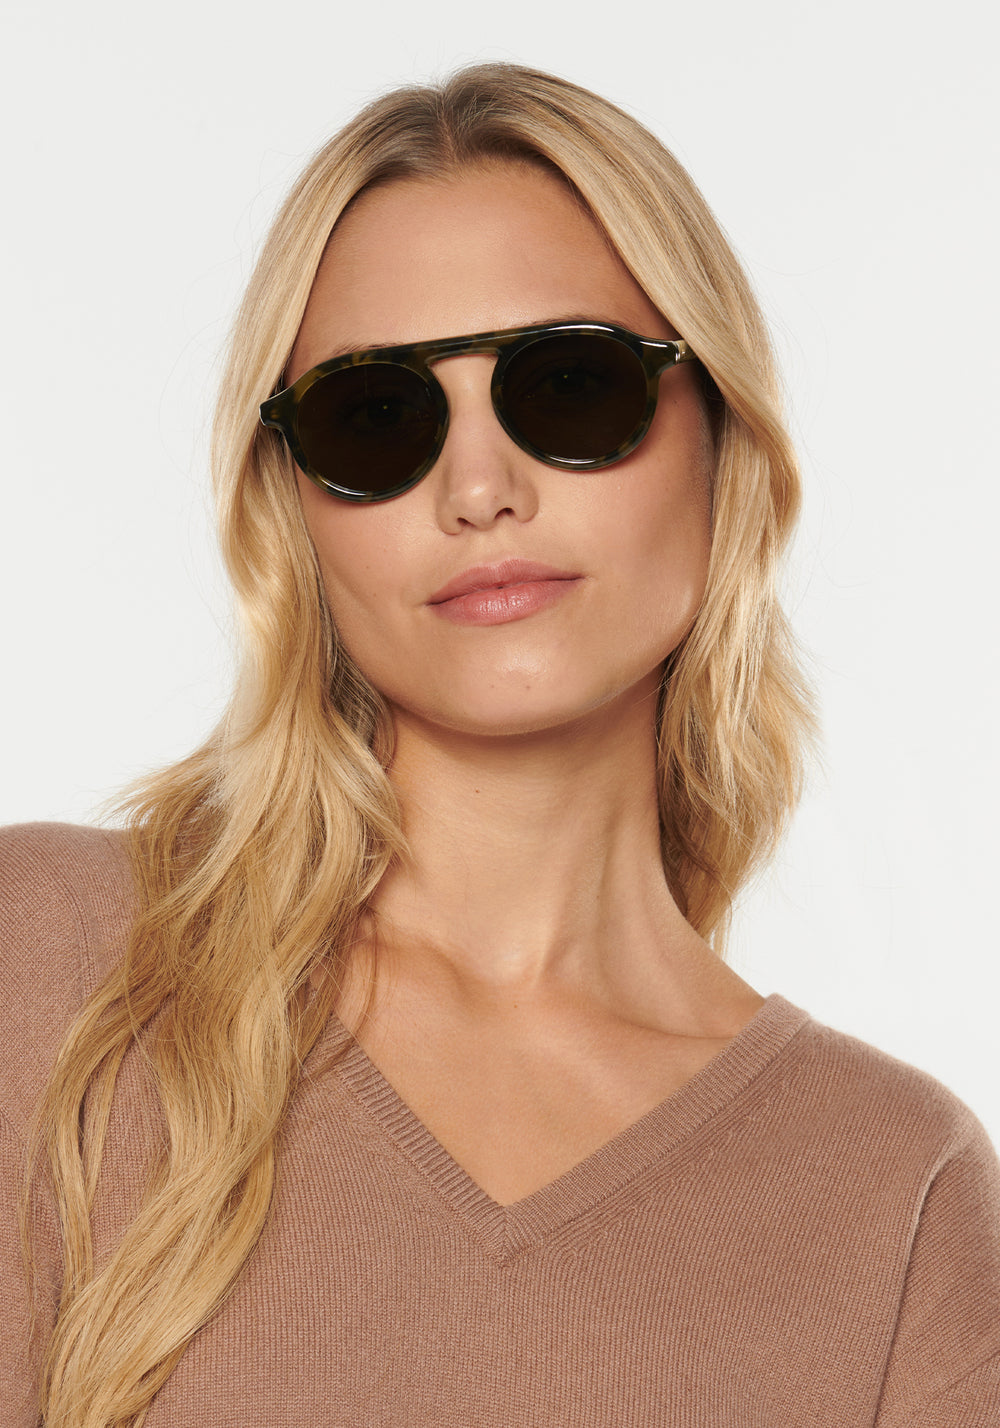 CAMERON | Tortuga Polarized Handcrafted, luxury dark brown acetate round aviator KREWE sunglasses womens model | Model: Erica